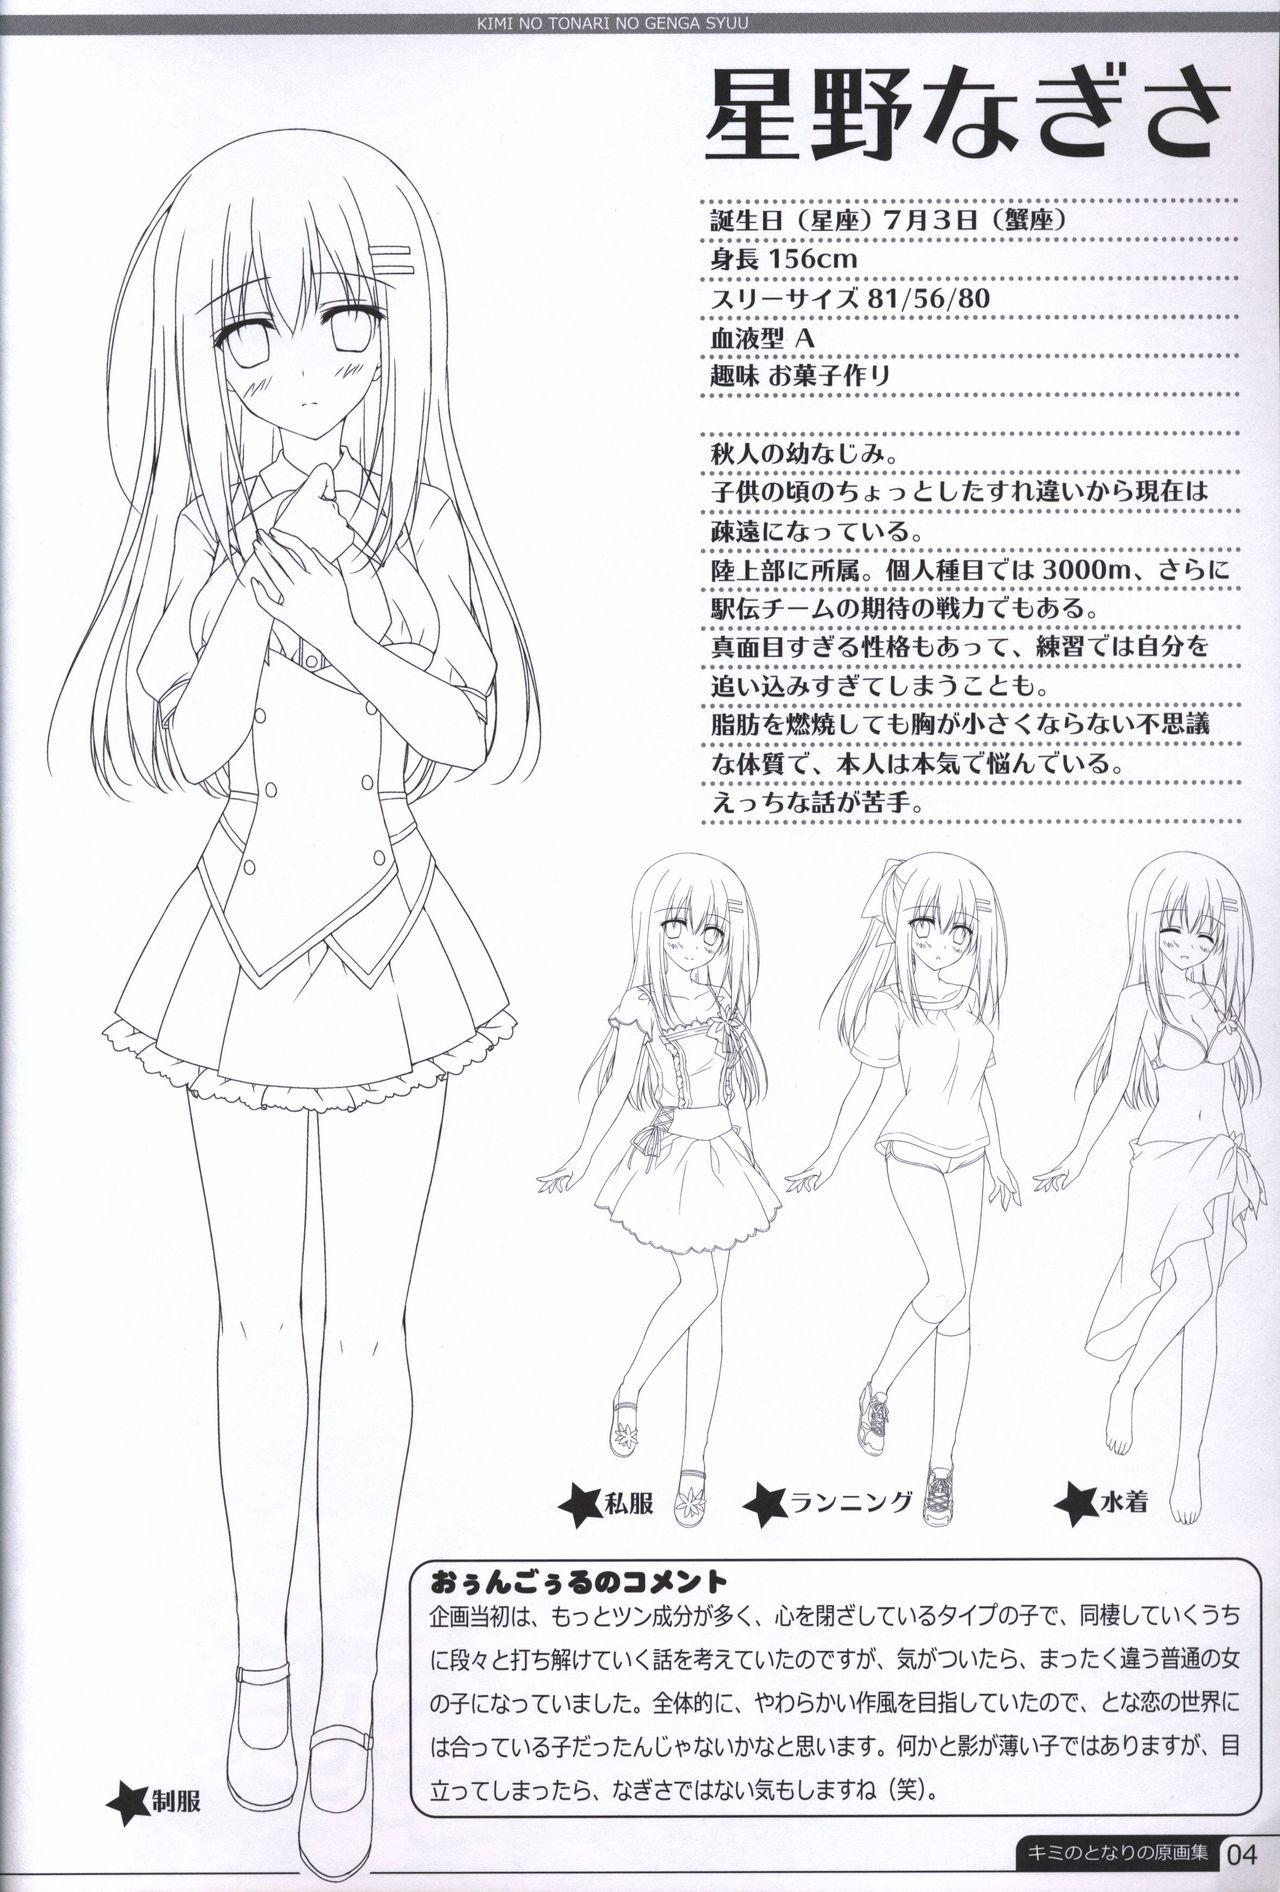 Nasty Kimi no Tonari no illustration art book Super - Page 3